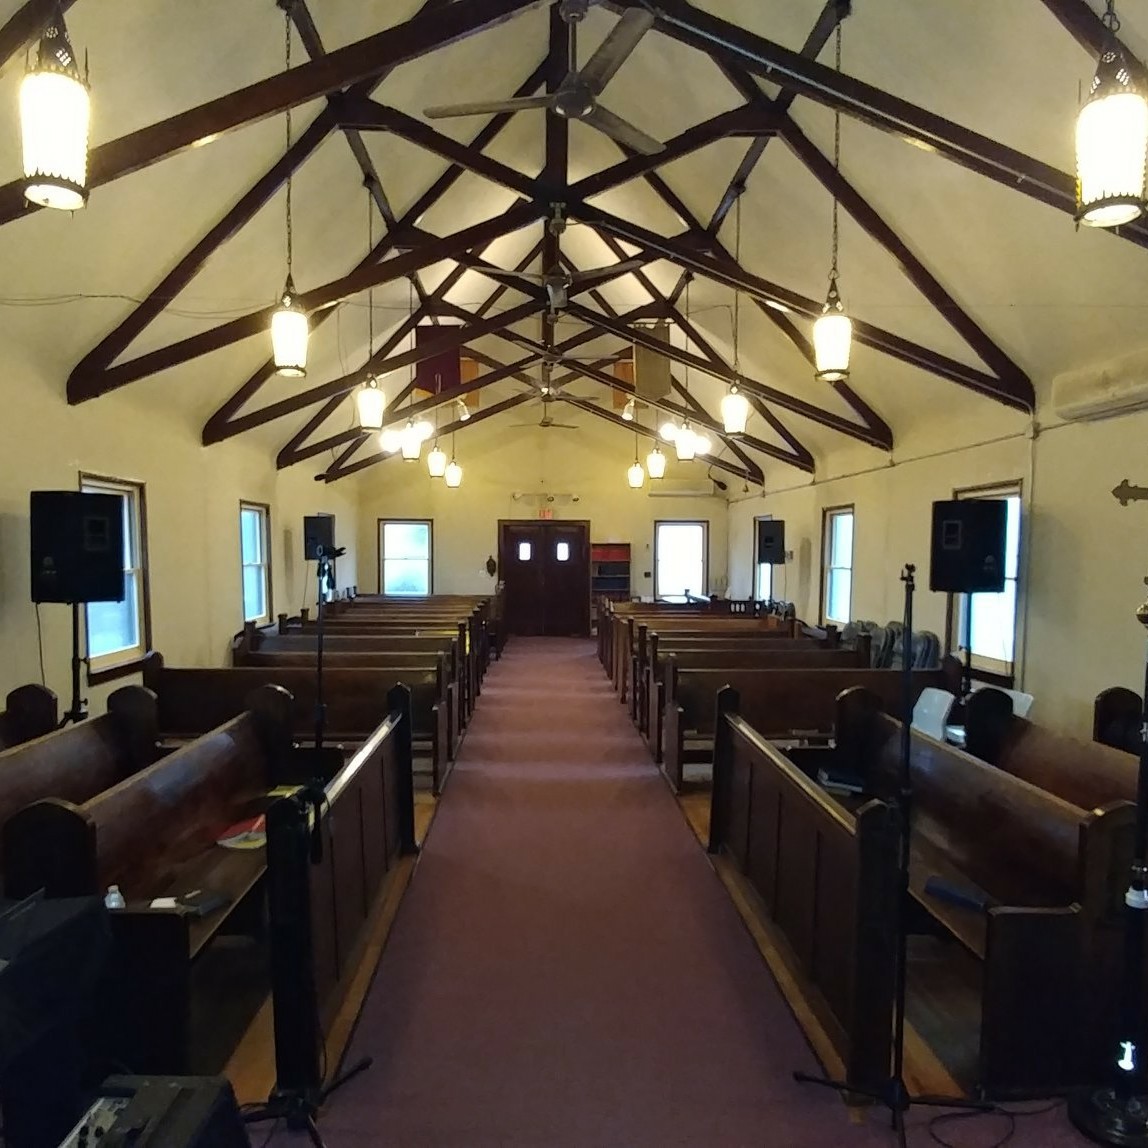 CHURCH - Inside